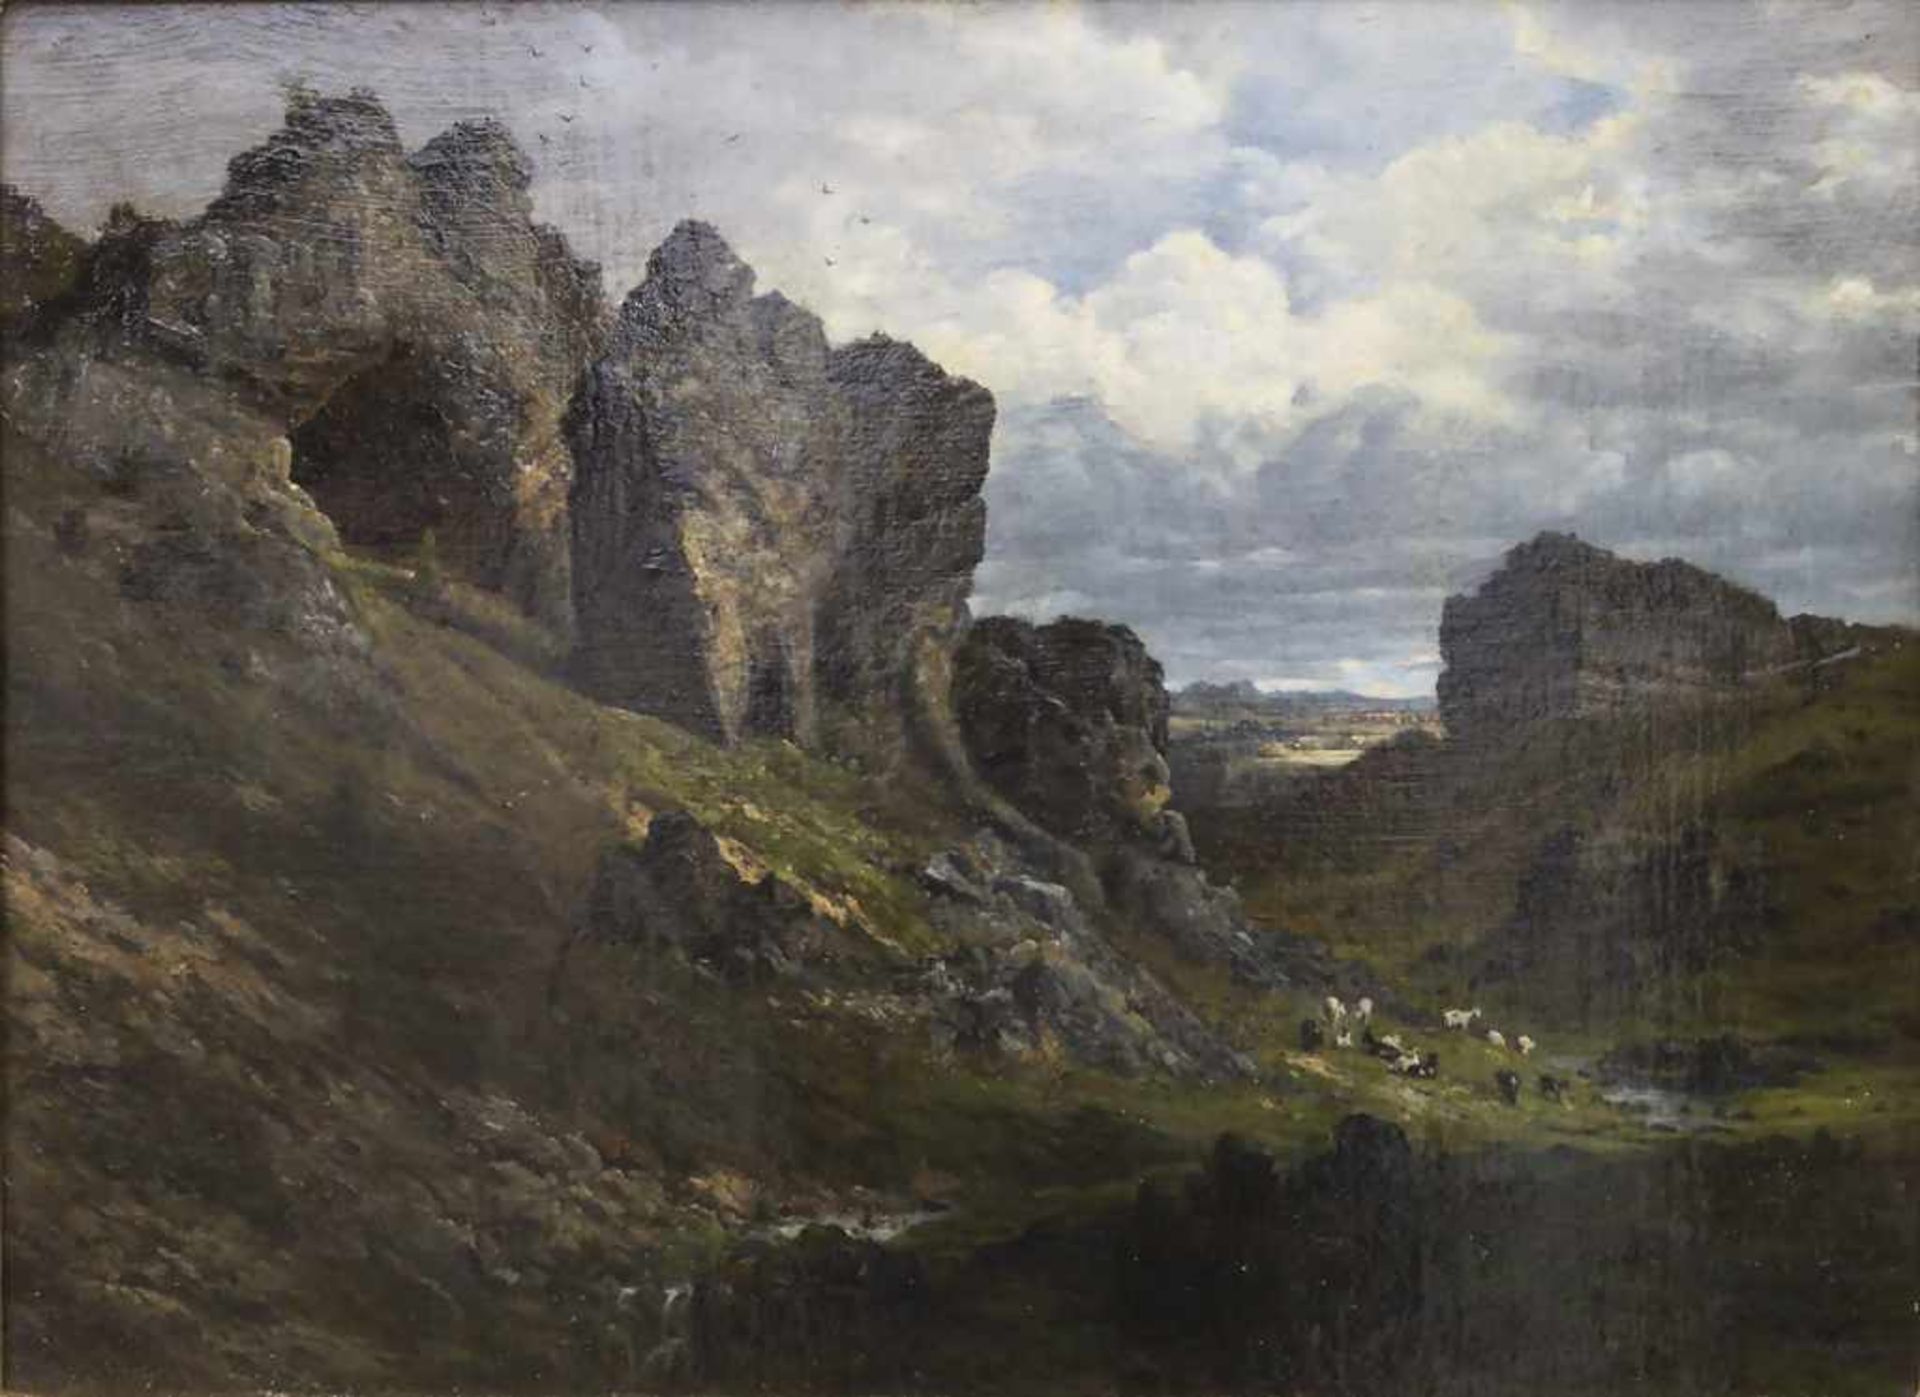 Hans Thoma (1839-1924), 'Felsenlandschaft mit Ziegenherde' / 'A rocky landscape with goats'